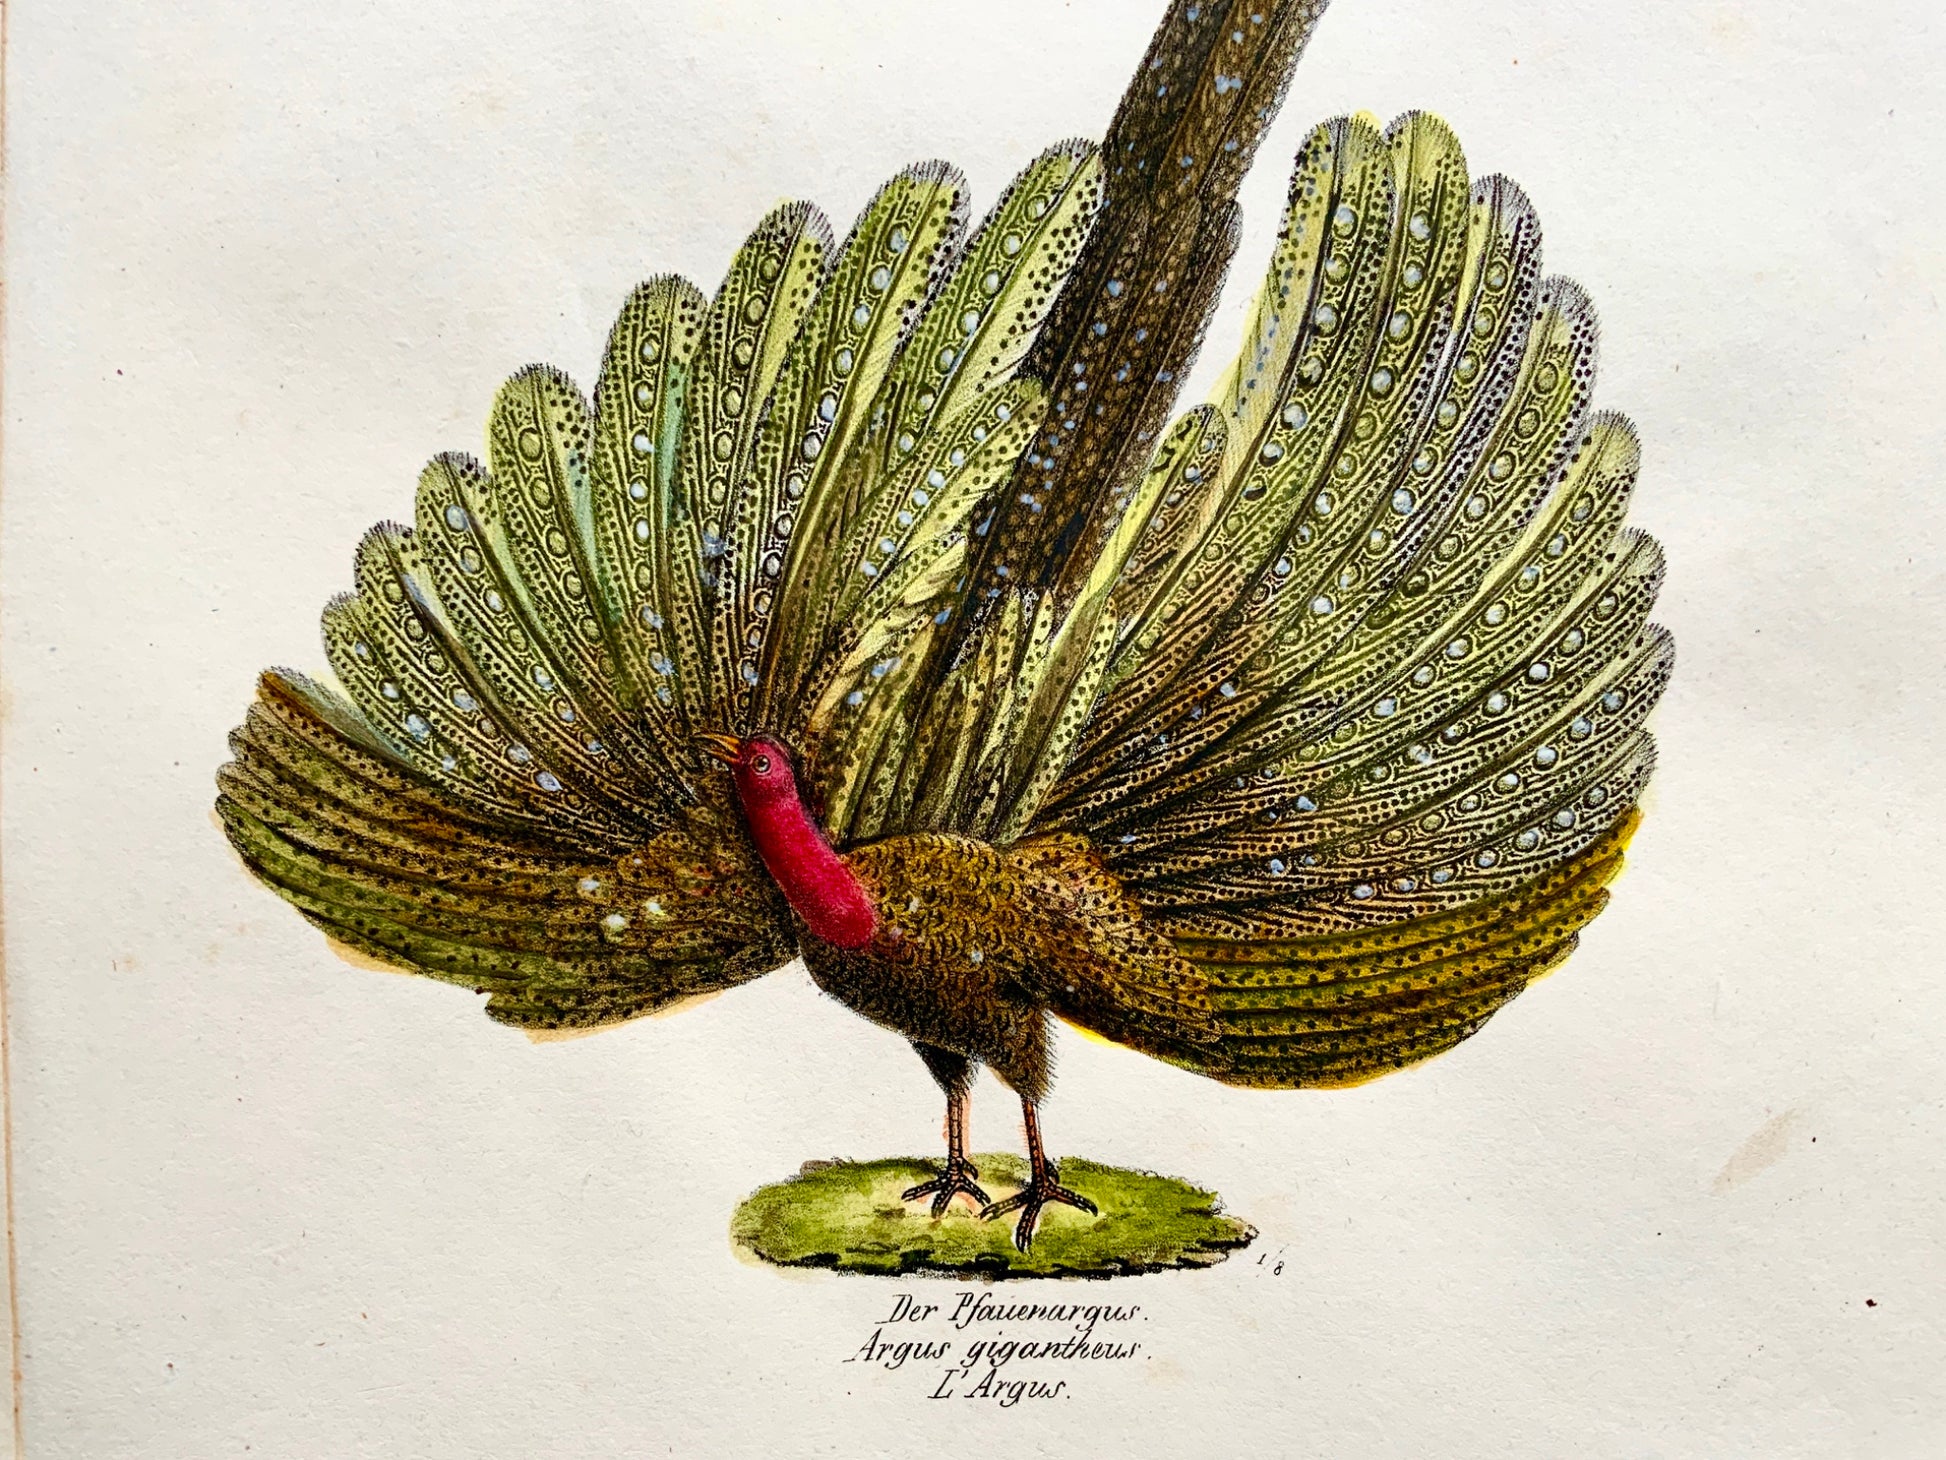 1830 ARGUS PHEASANT Ornithology - Brodtmann hand coloured FOLIO lithography